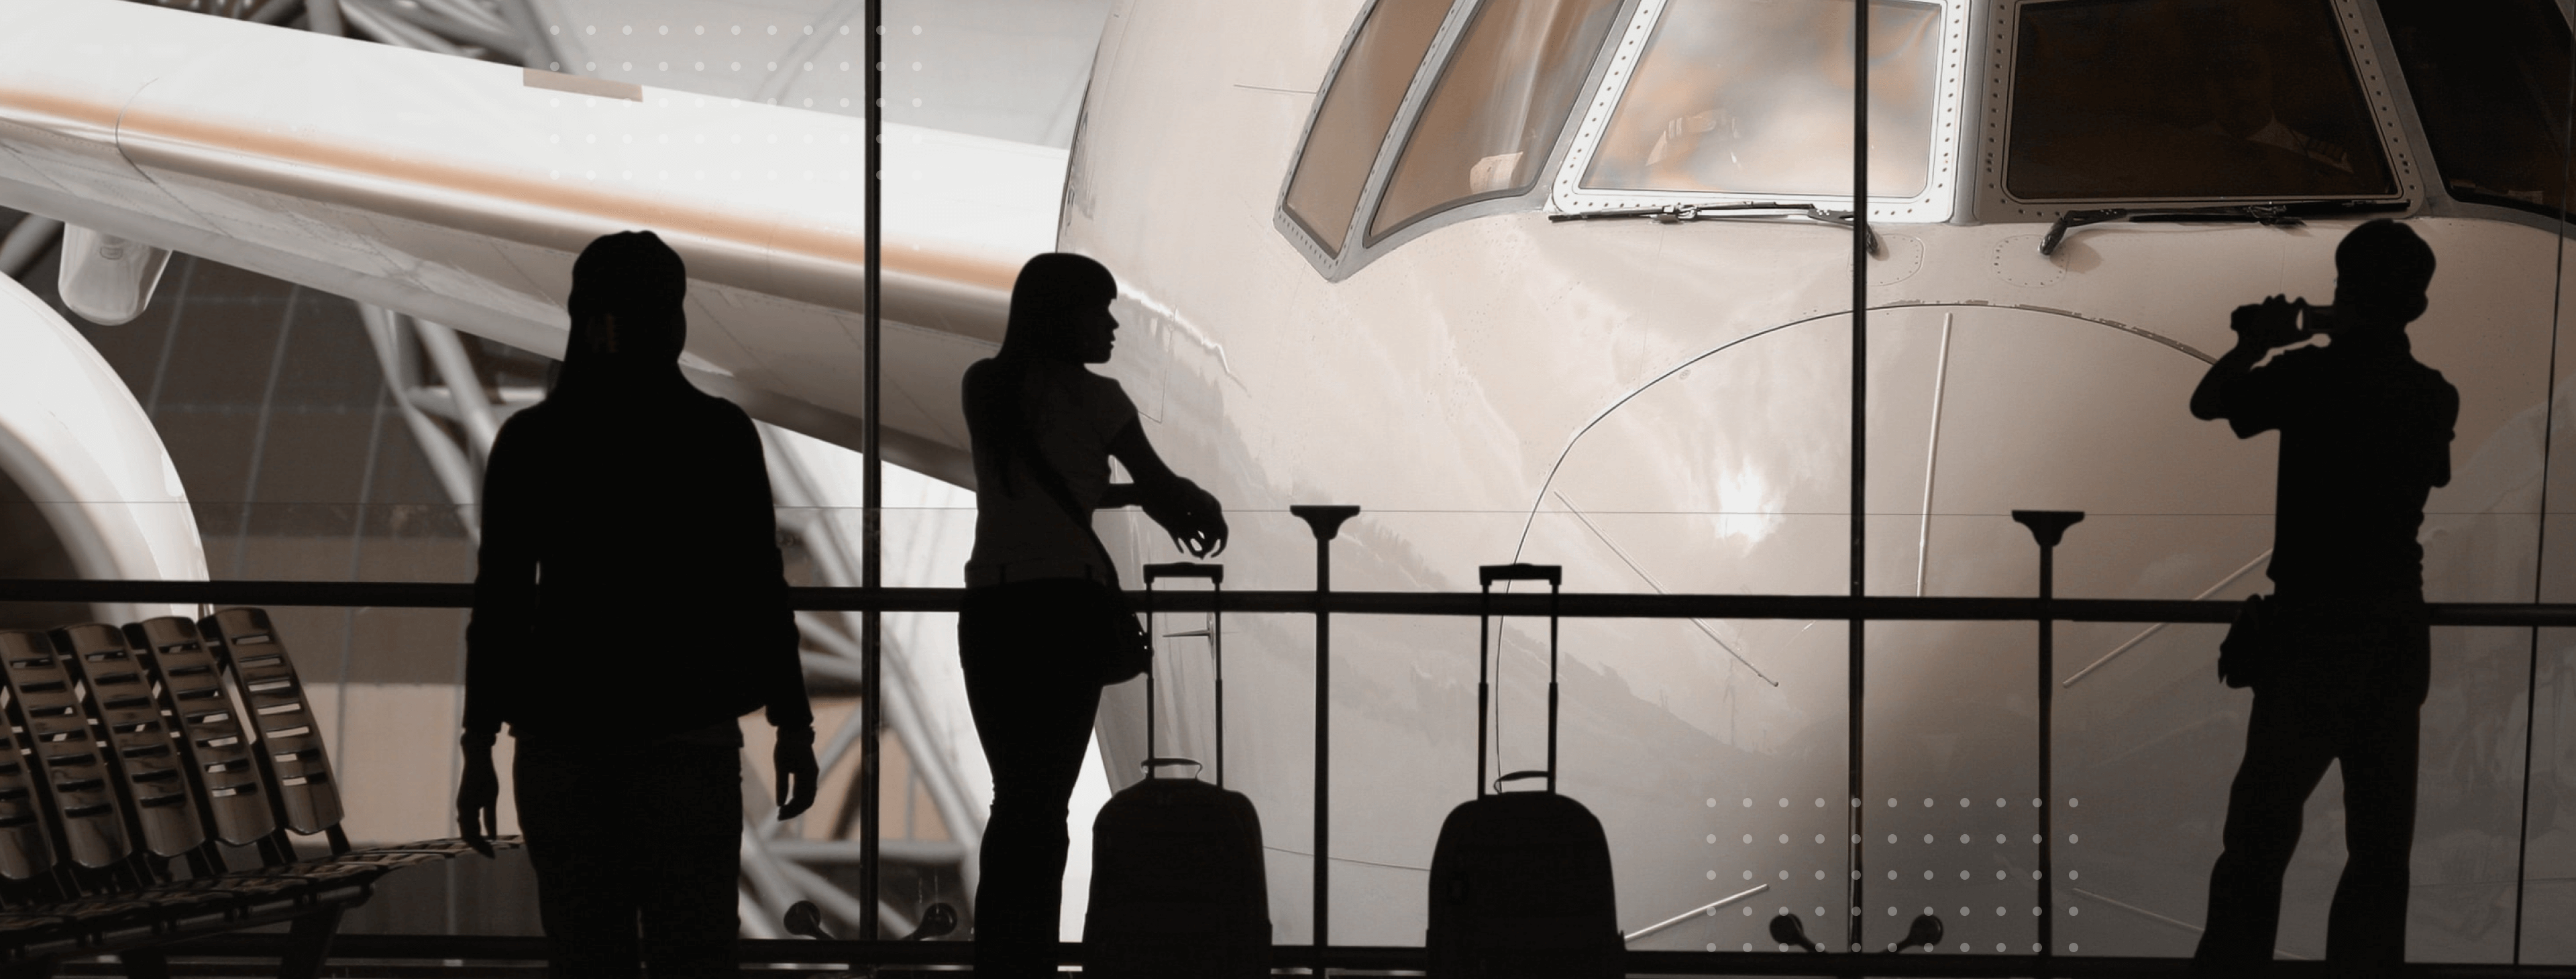 the digital future of air travel